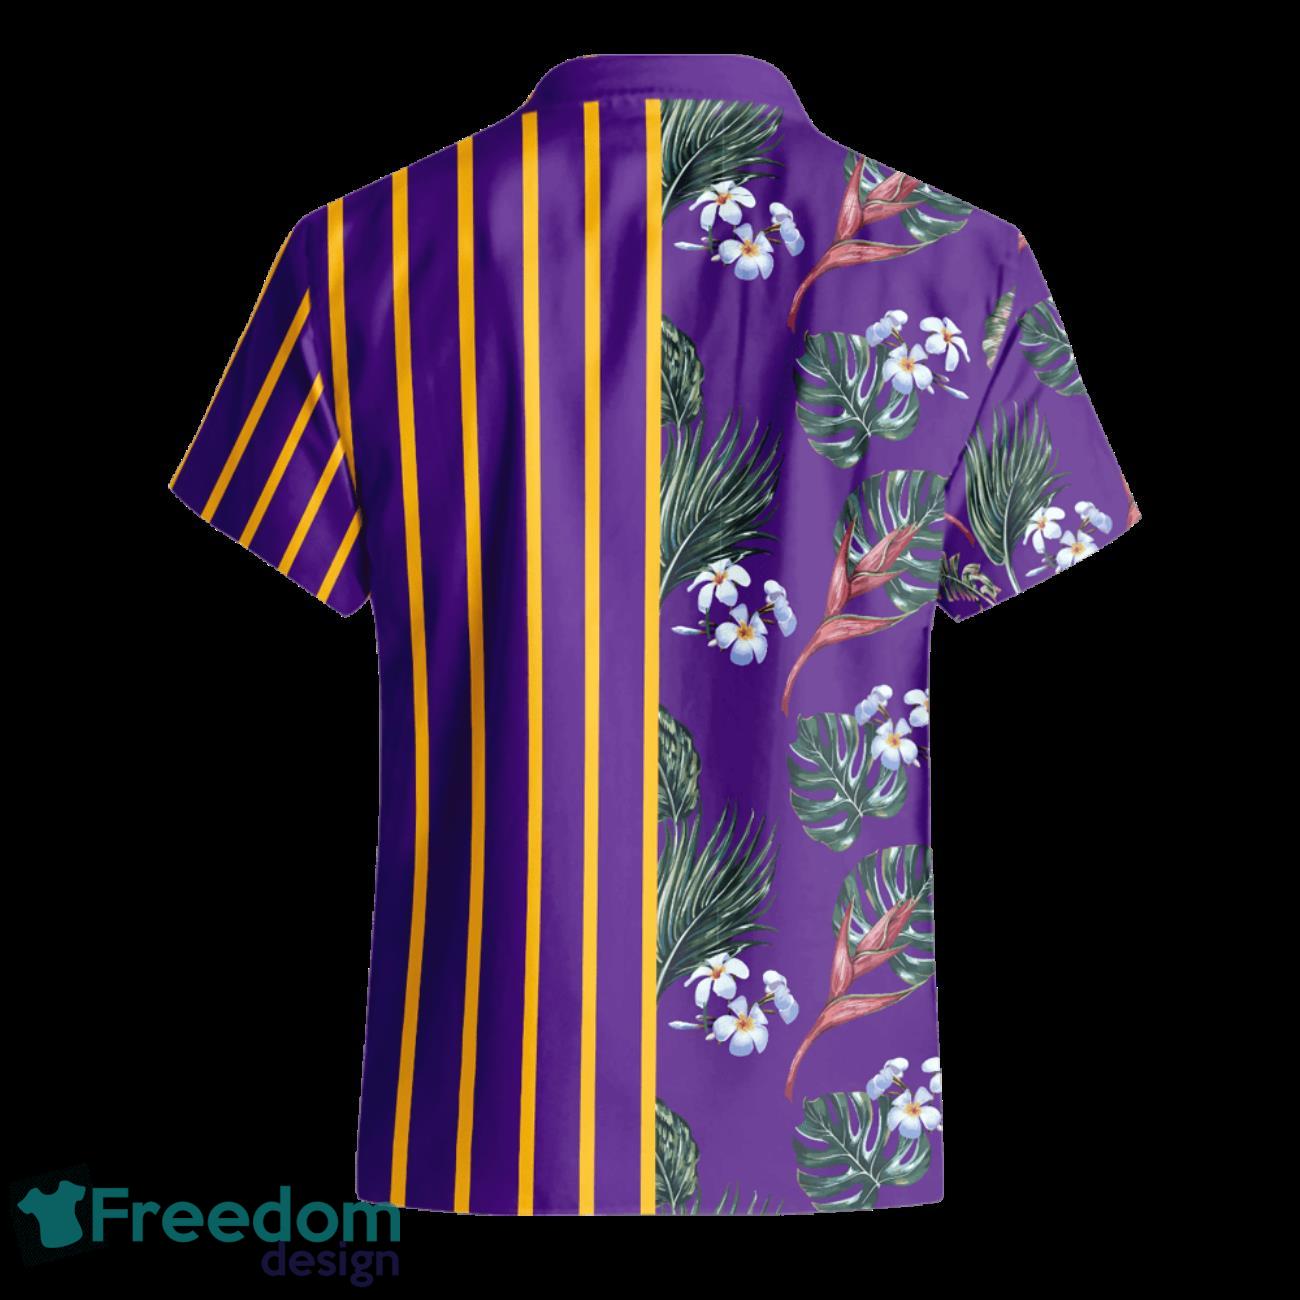 Los Angeles Lakers NBA Fans Gift Hawaiian Shirt - Freedomdesign